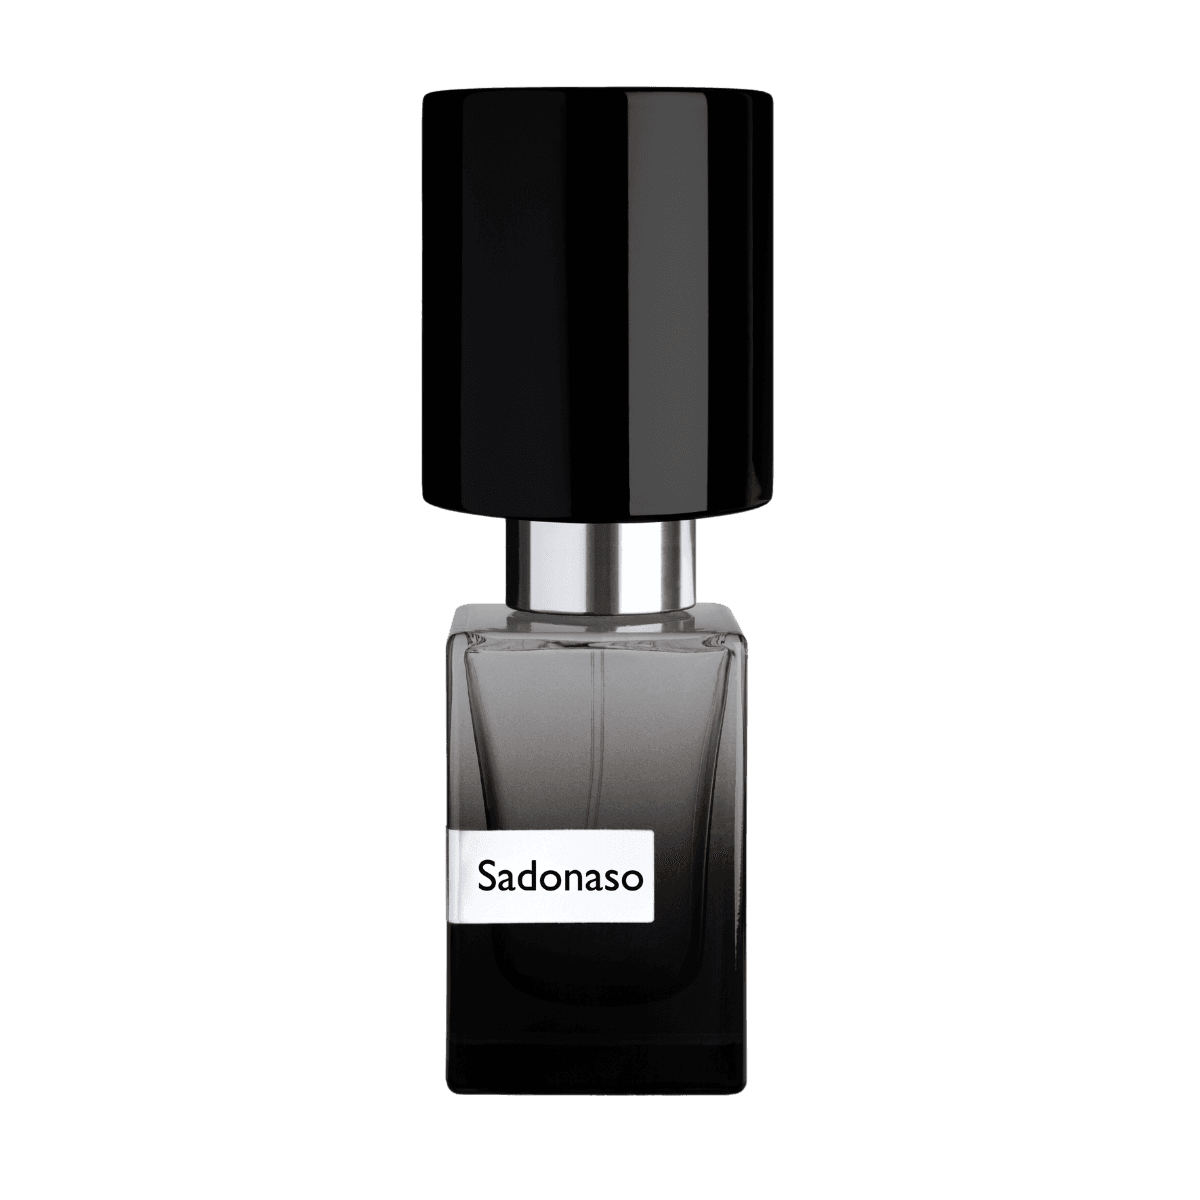 Image of Sadonaso extrait de parfum 30 ml by the perfume brand Nasomatto